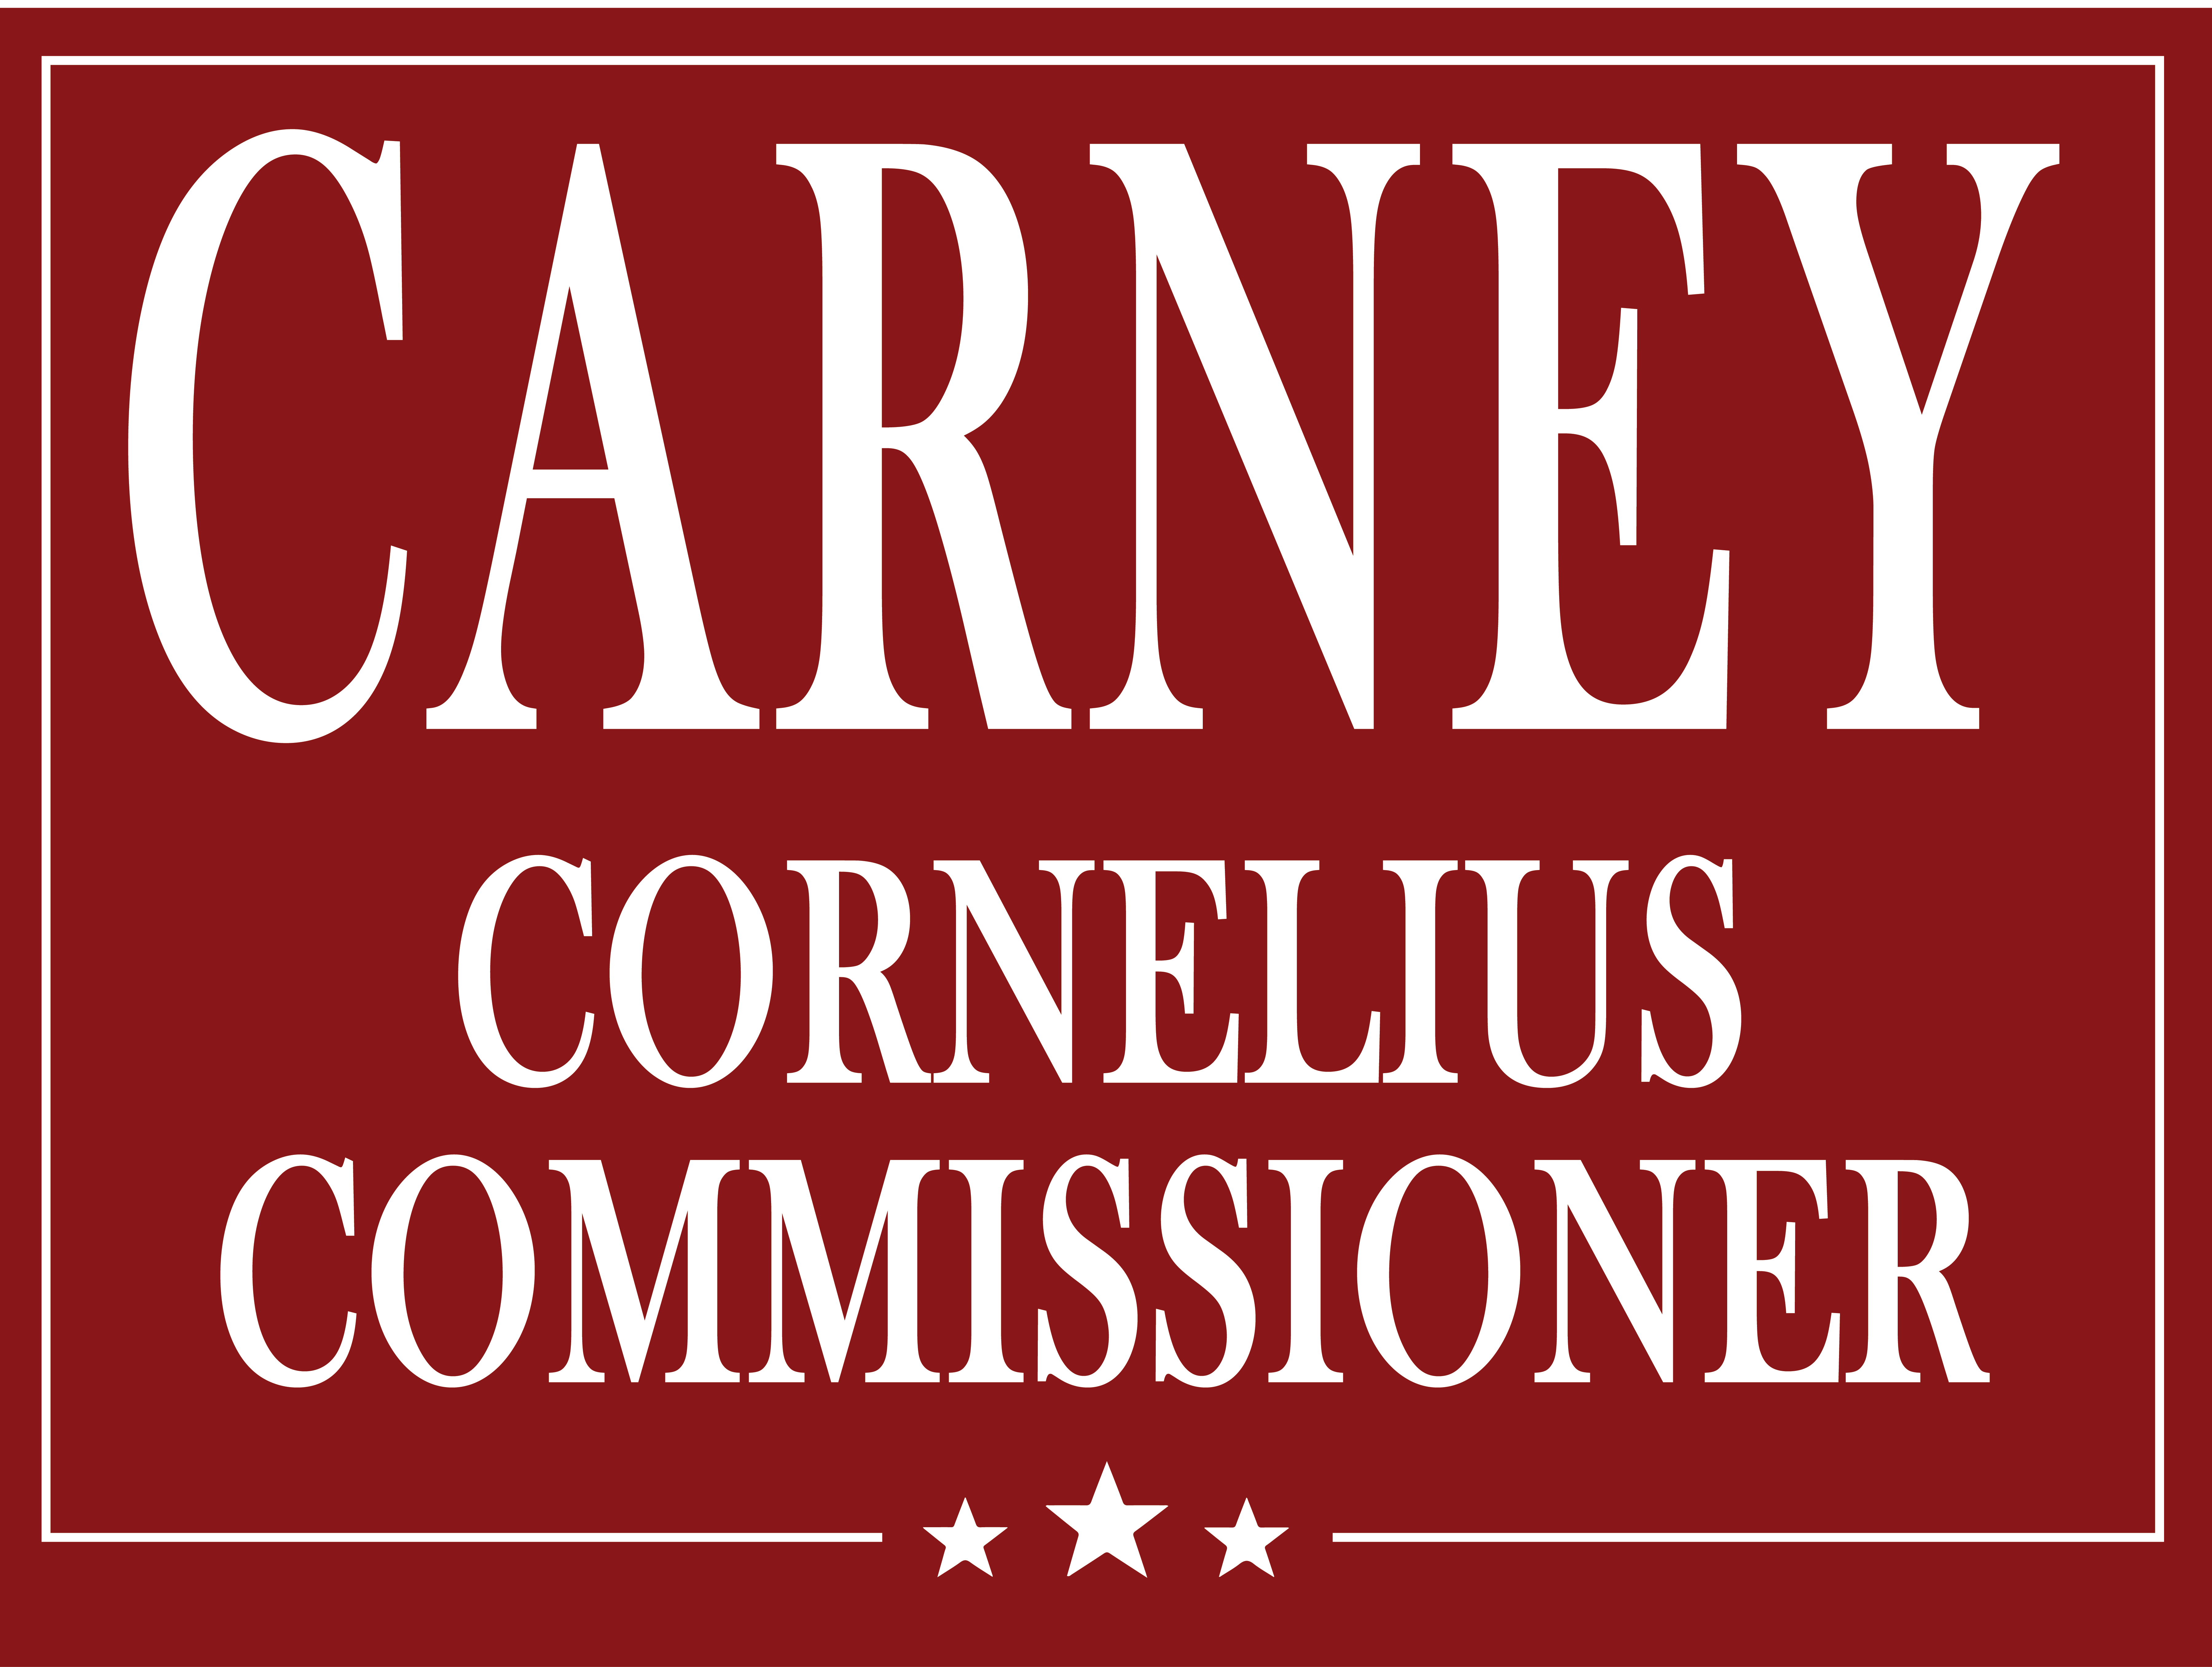 Robert Carney Logo 2